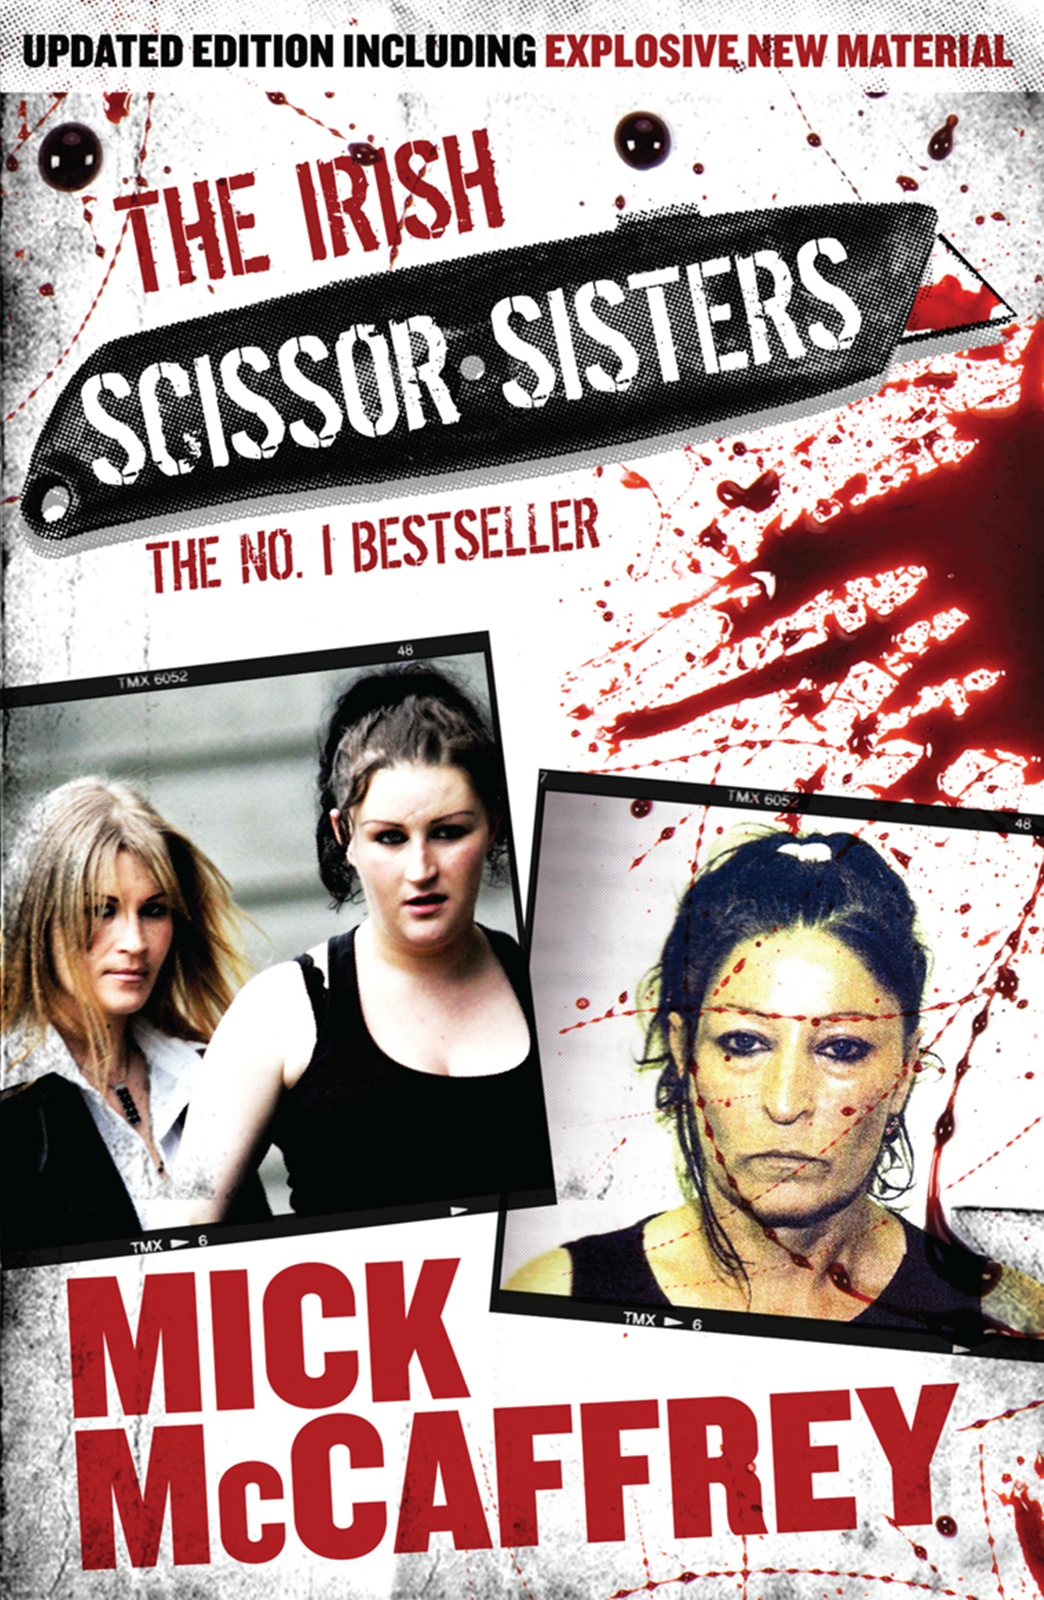 The Irish Scissor Sisters by Mick McCaffrey